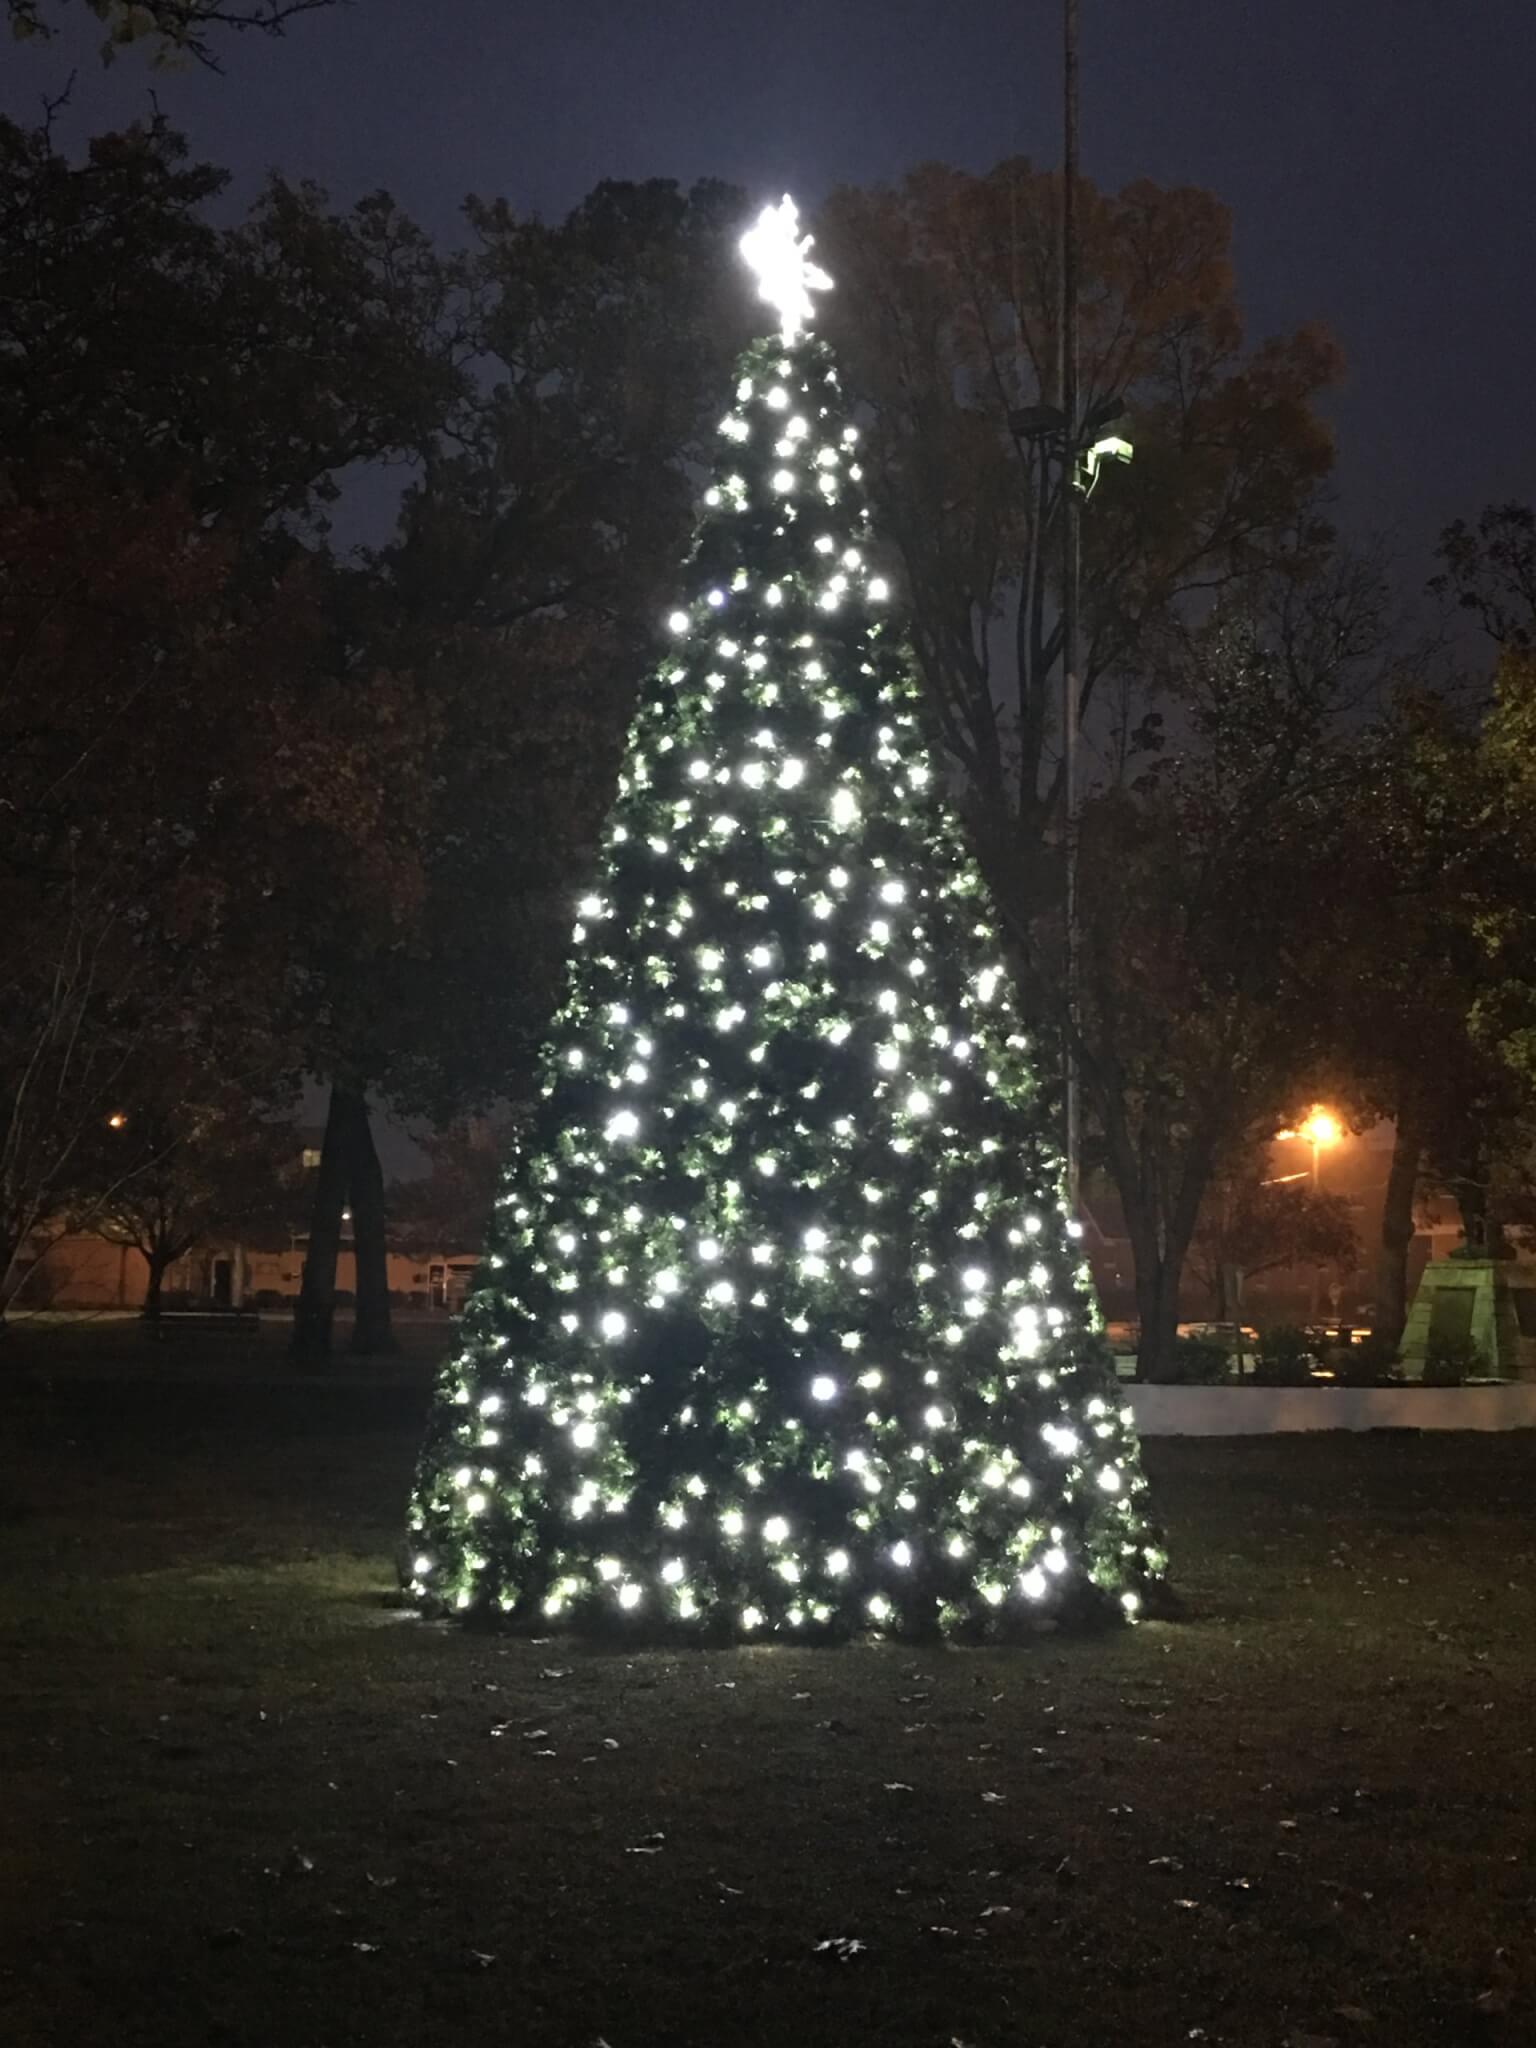 Annual City of Bessemer Christmas Tree Lighting The City of Bessemer